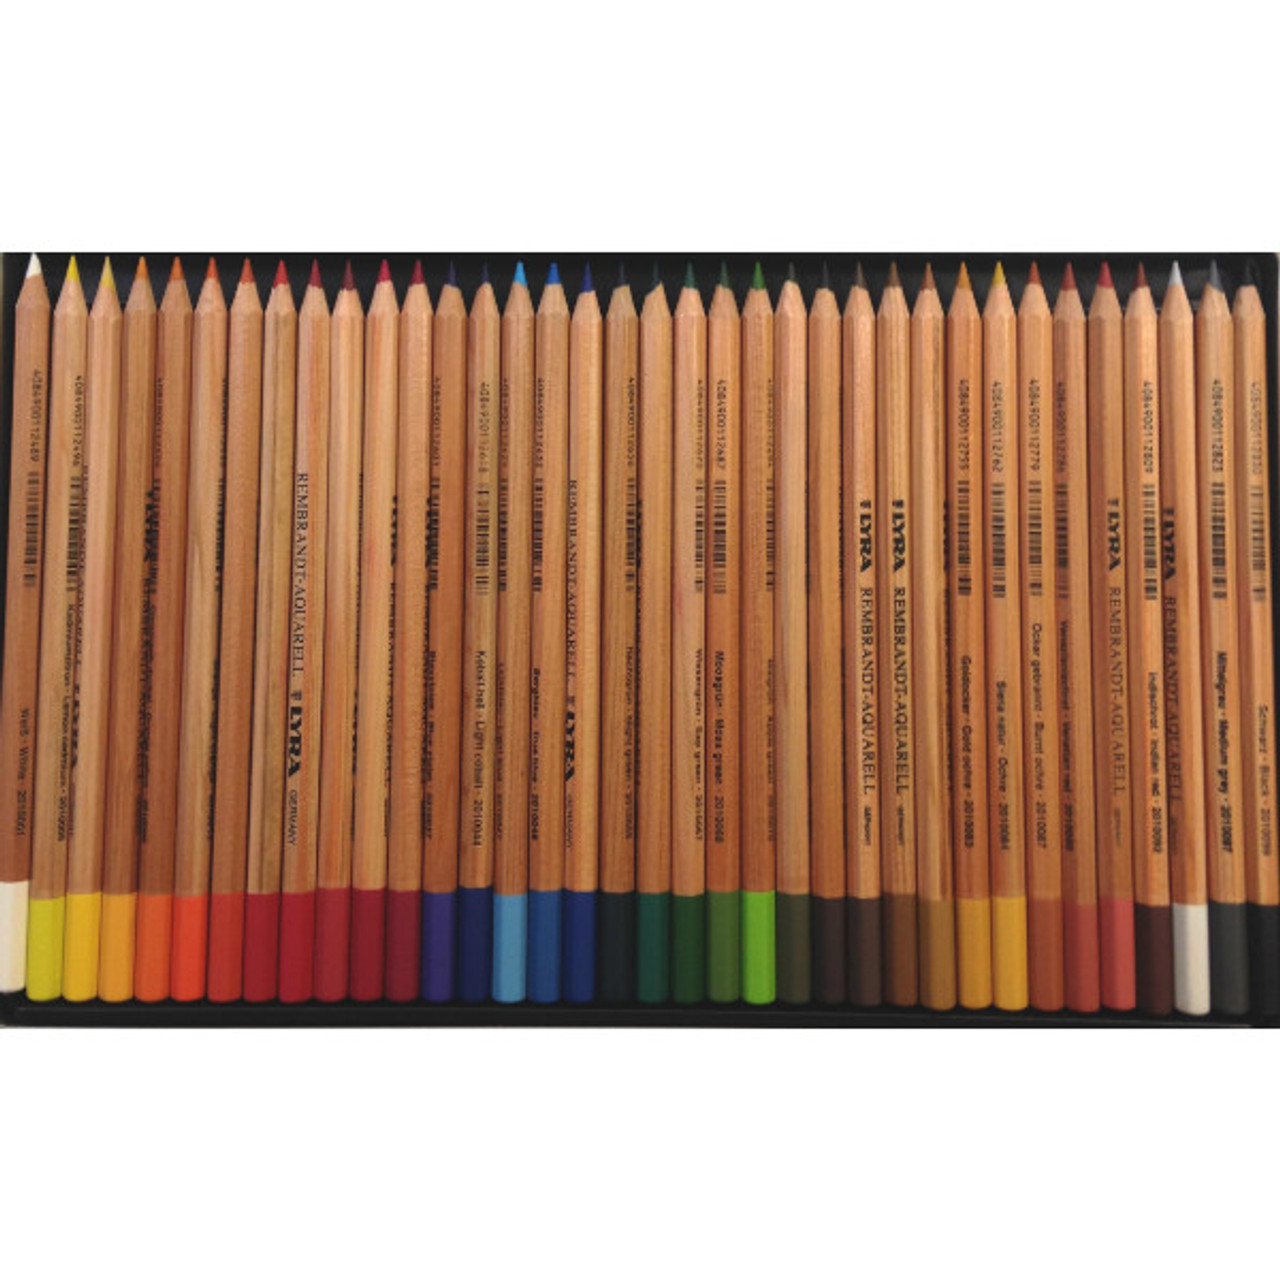 Lyra Rembrandt Aquarell (Water Soluble) Colored Pencils - Slim Barrel